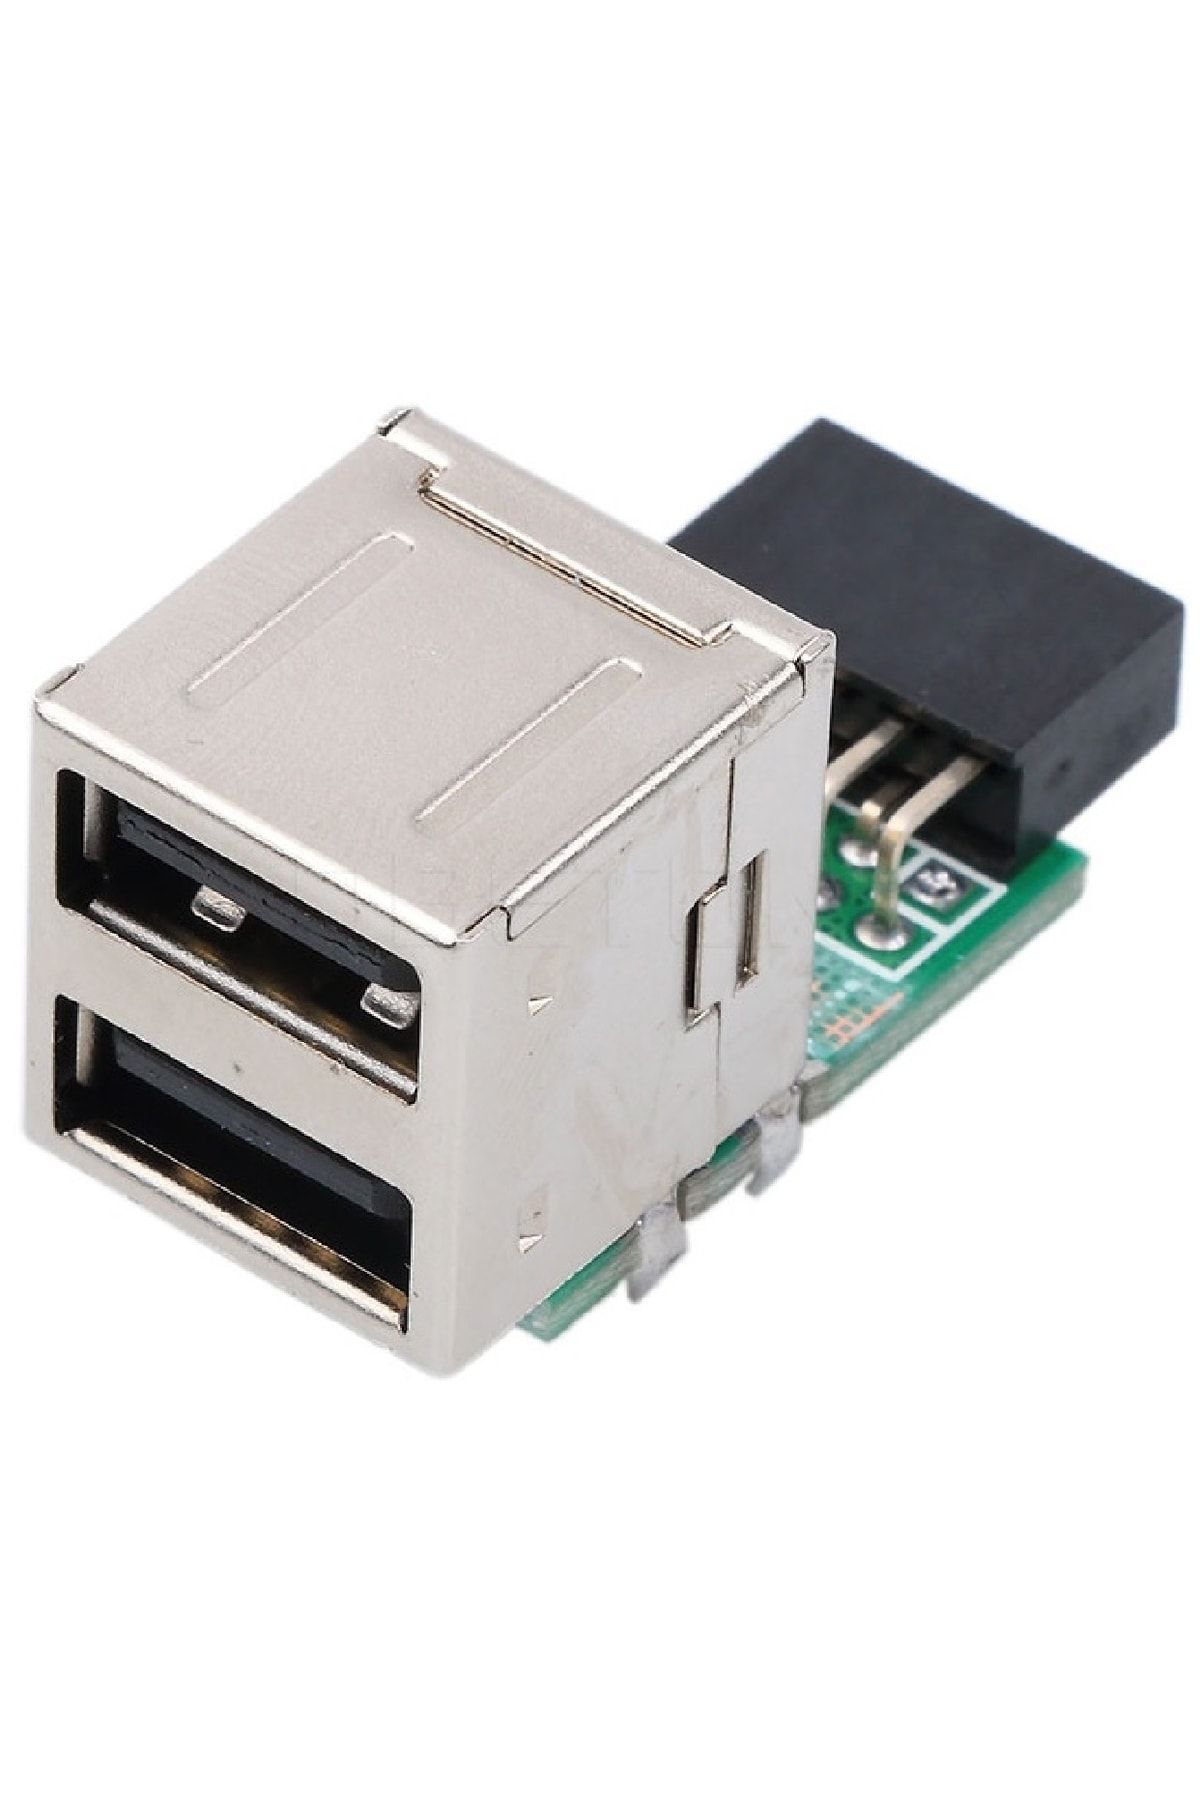 Alfais 5091 9 Pin Usb To 2x Usb A Anakart Çevirici Dönüştürücü Çoklayıcı Adaptör